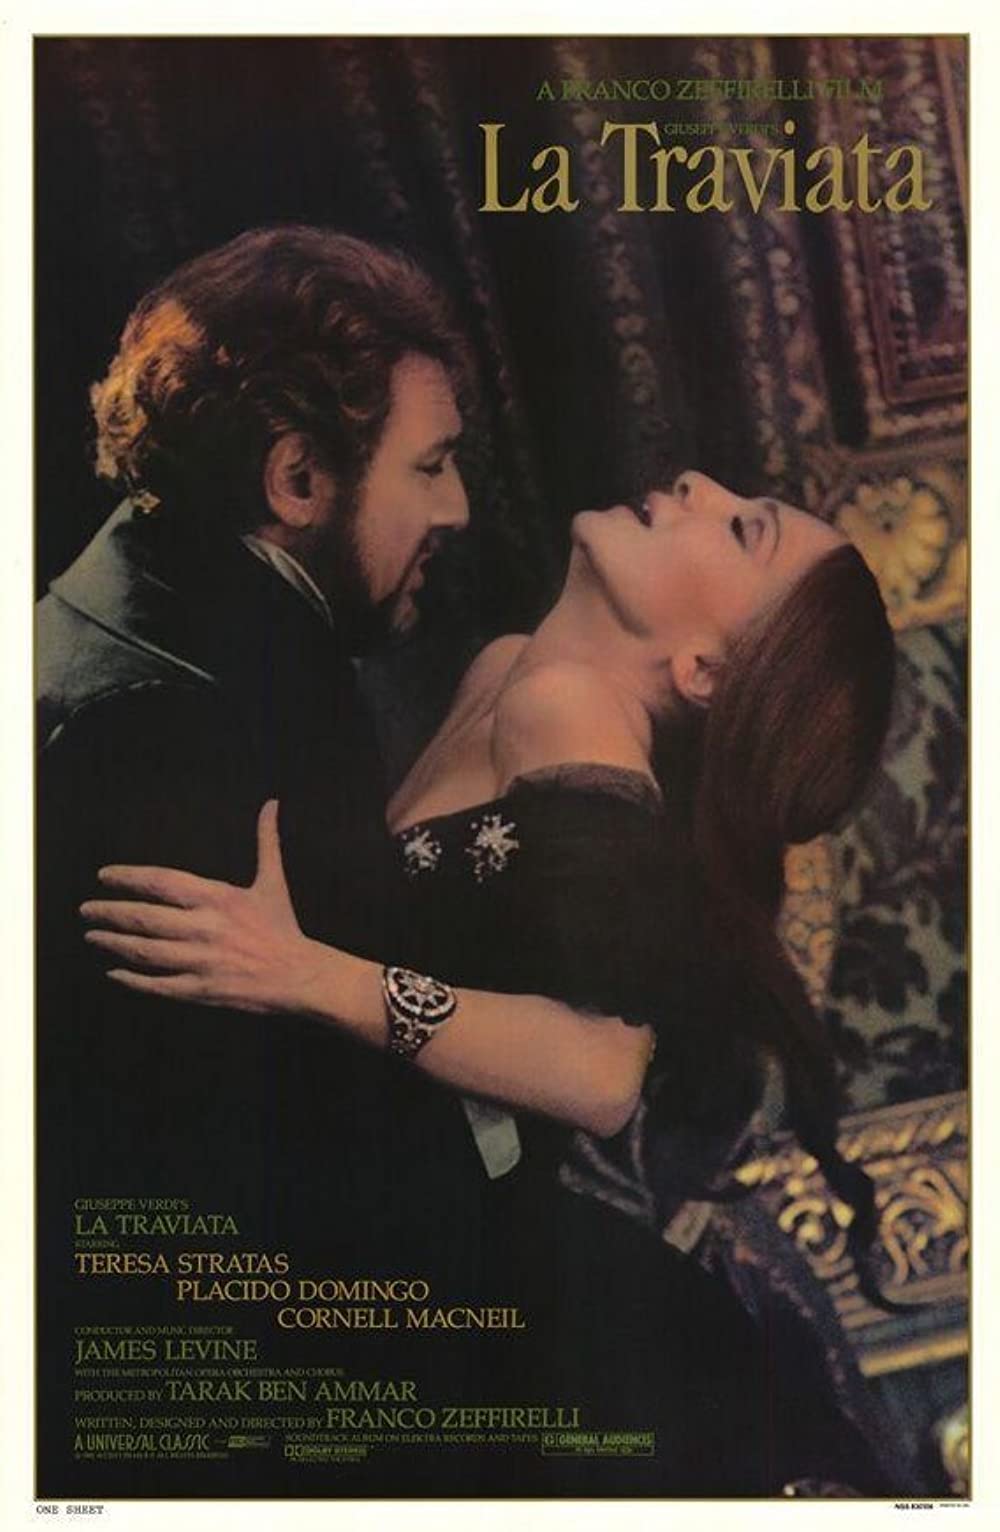 Filmbeschreibung zu La Traviata (1982)